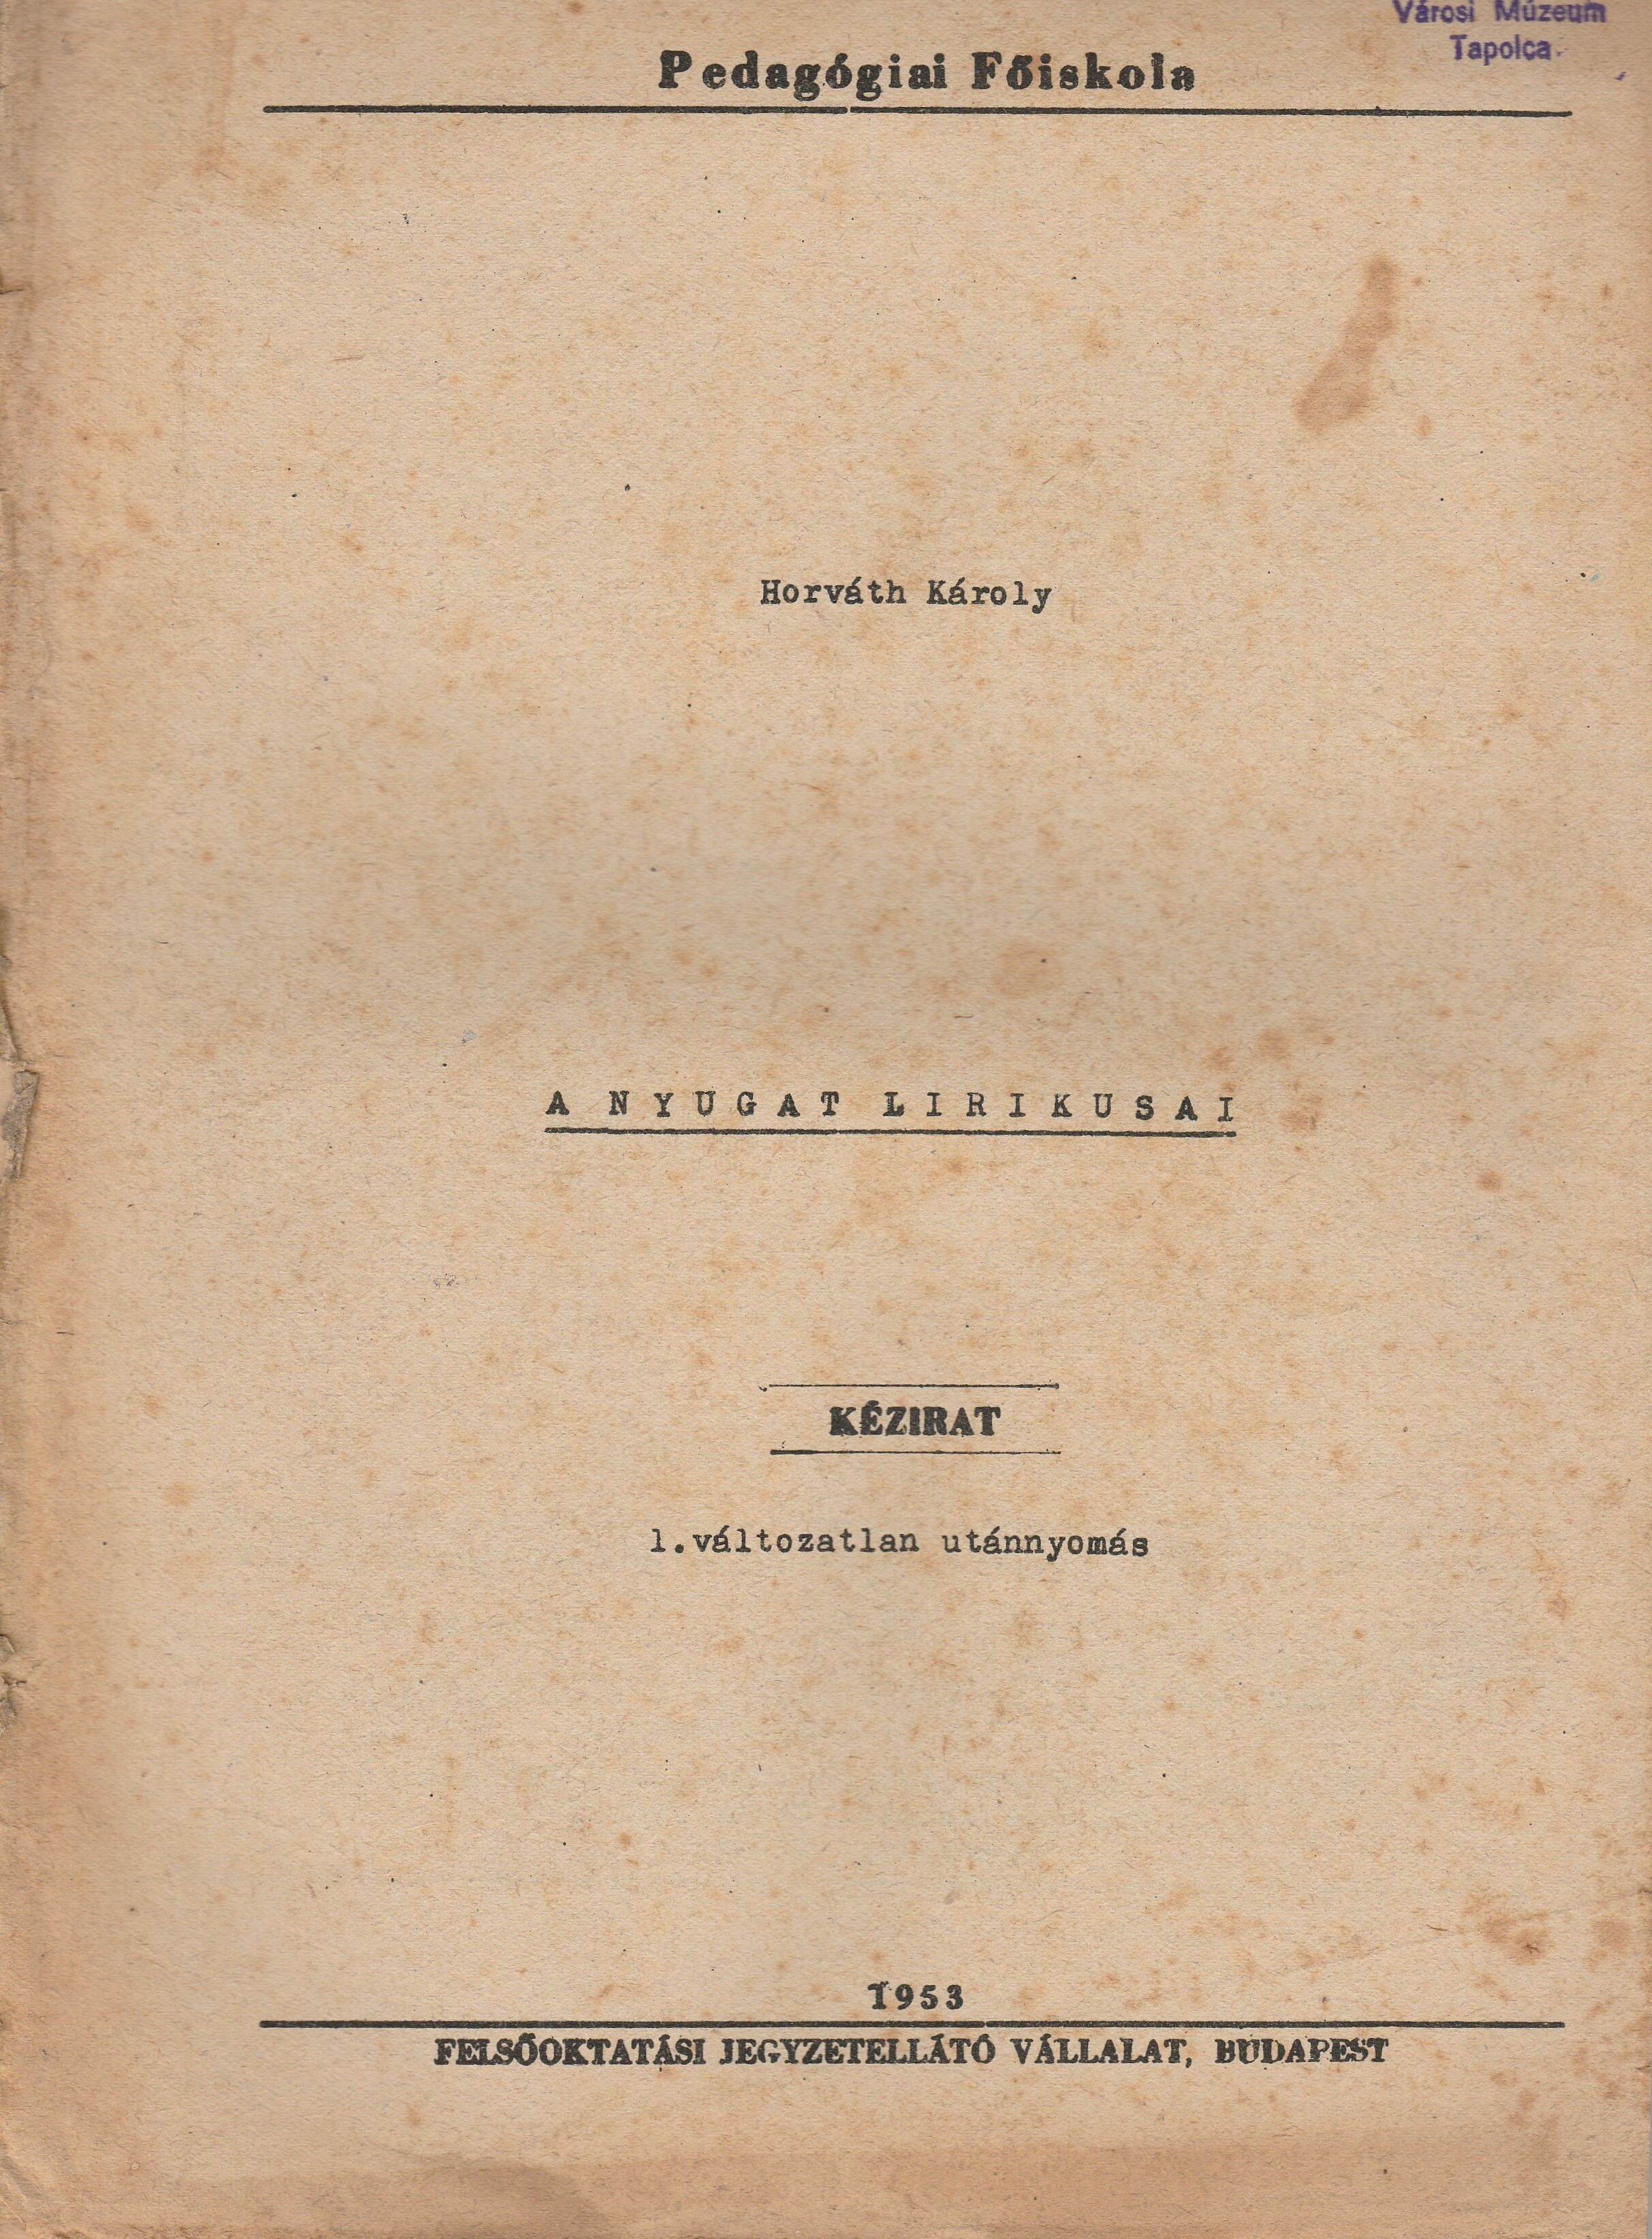 A Nyugat lírikusai című kéziratos jegyzet (Tapolcai Városi Múzeum CC BY-NC-SA)